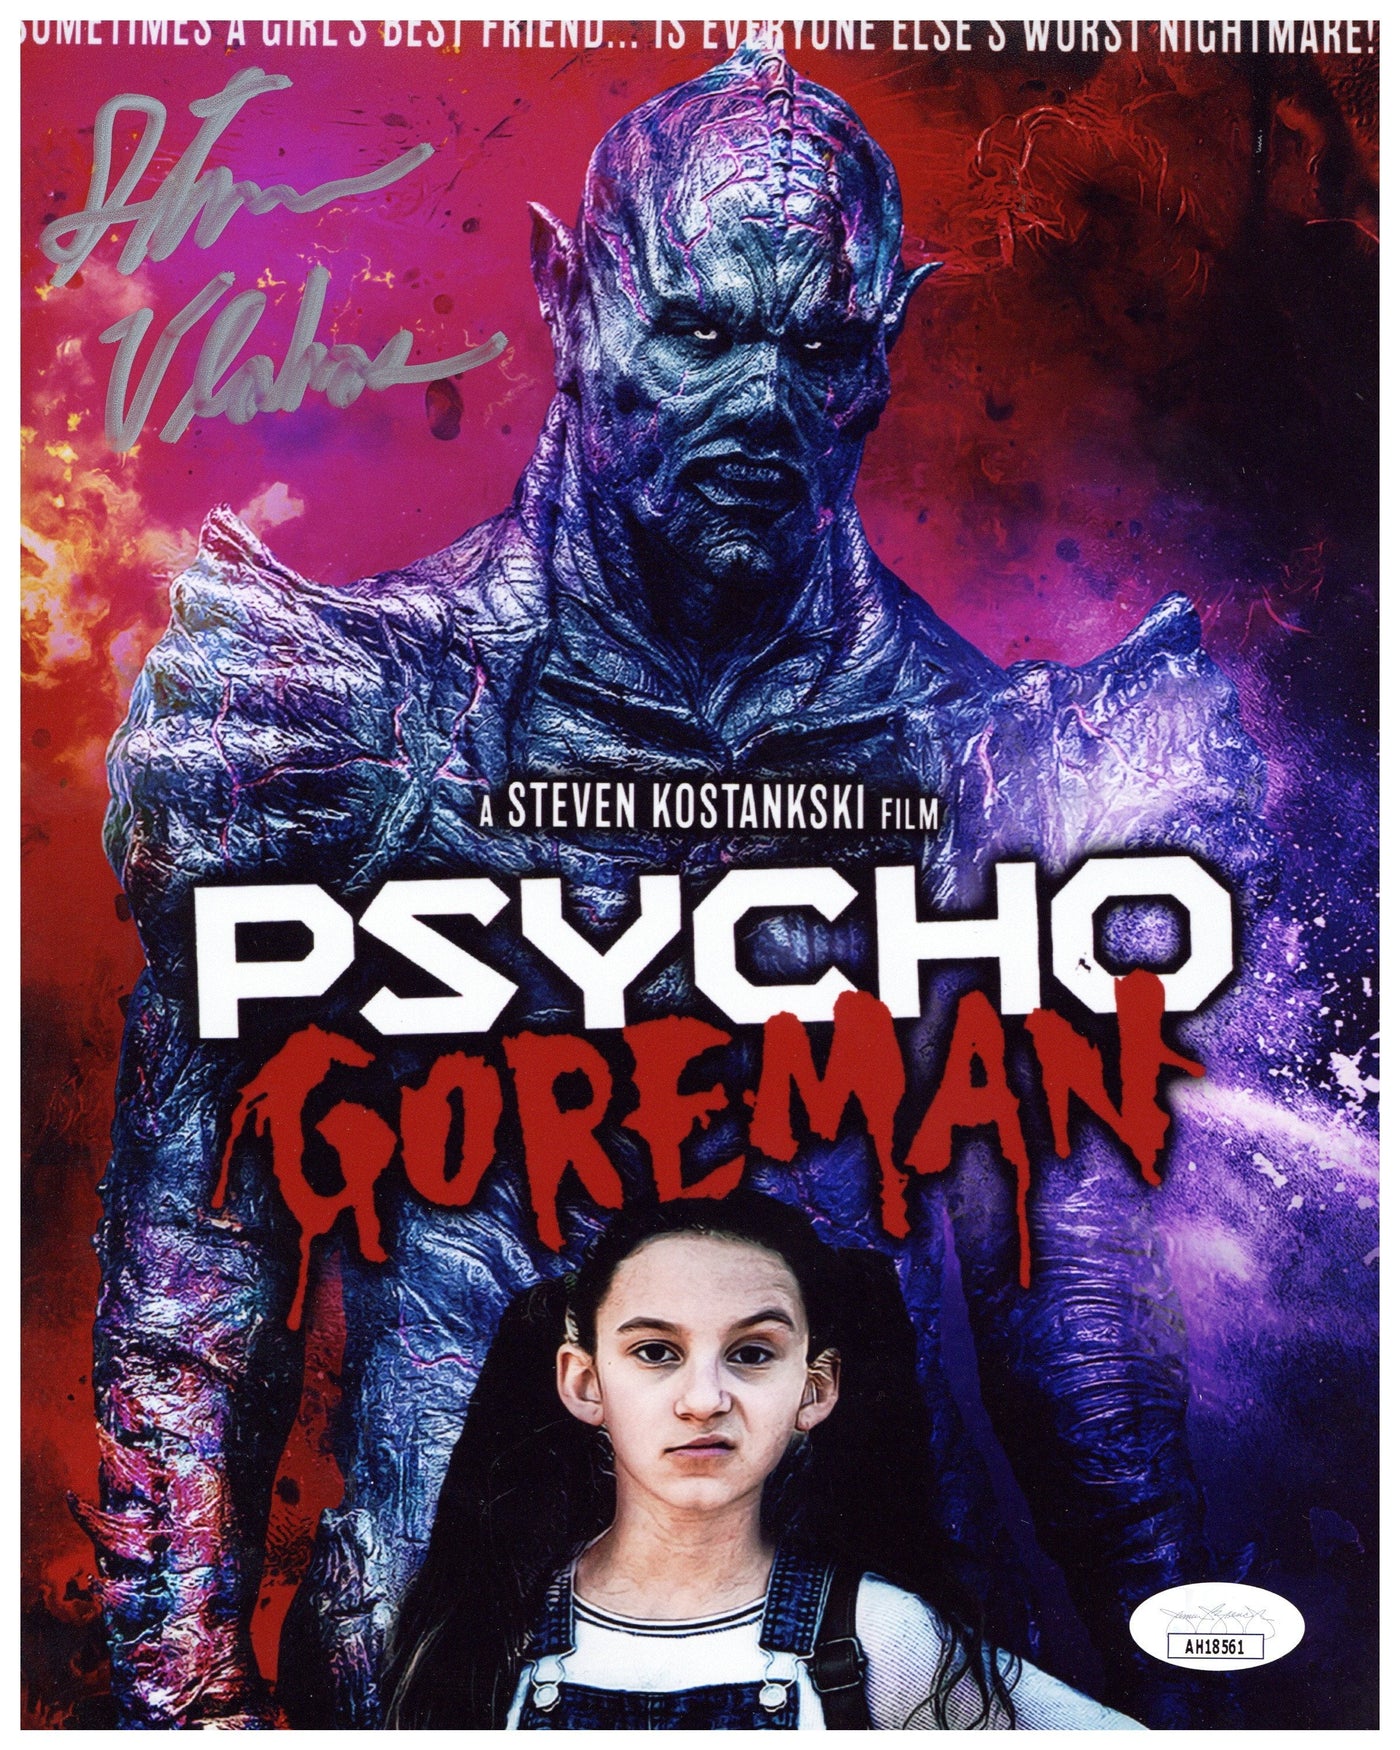 Steven Vlahos Signed 8x10 Photo Psycho Goreman Autographed JSA COA 2